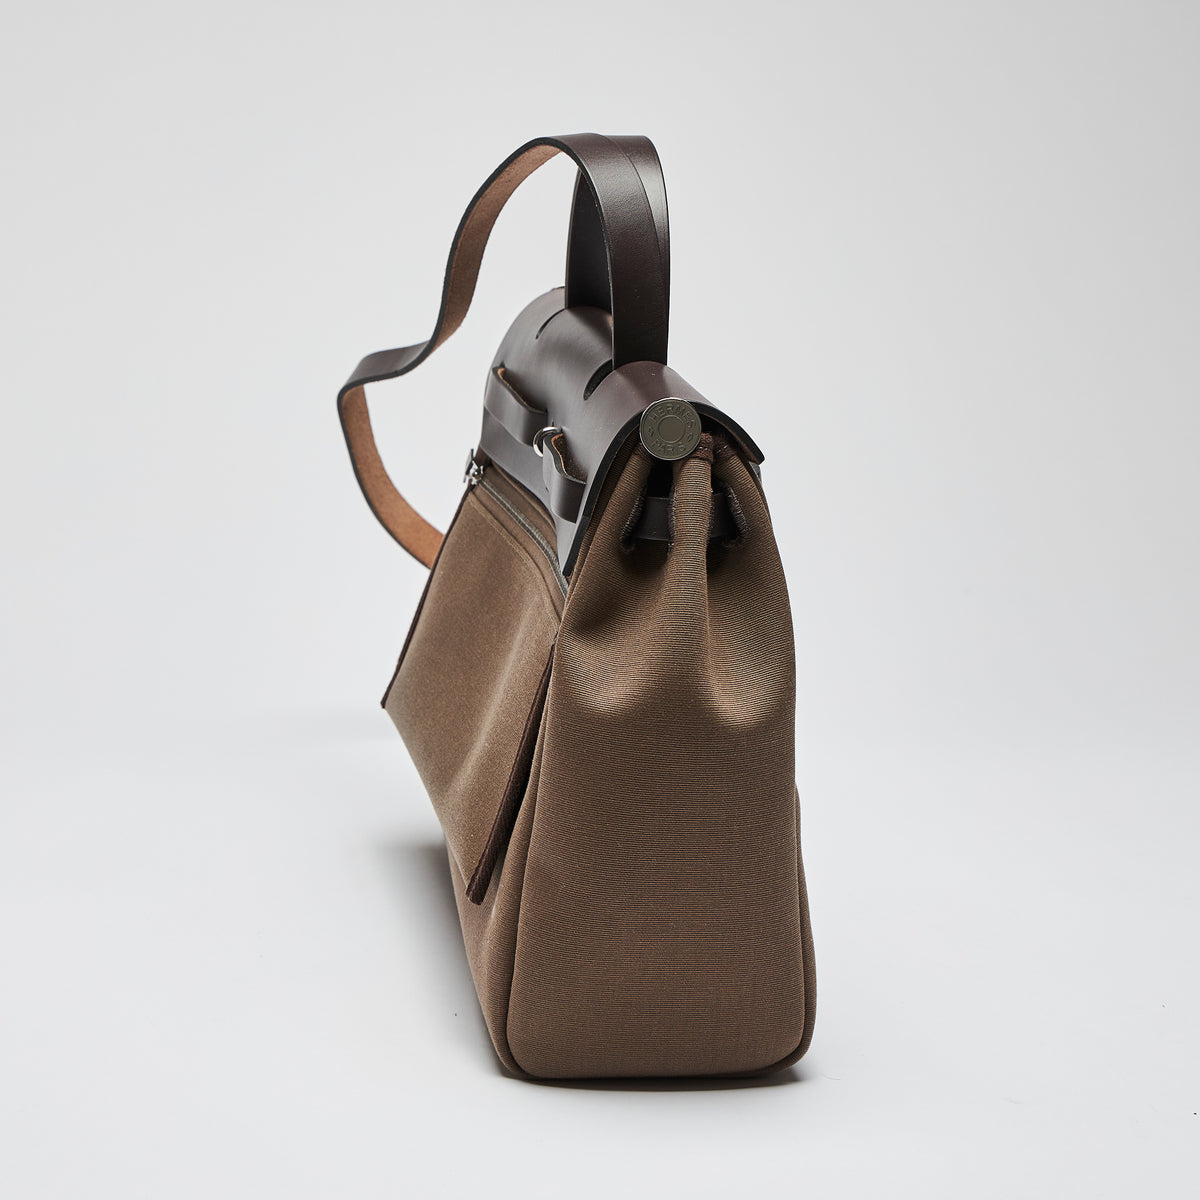 Excellent Pre-Loved Brown Canvas Top Handle Flap Bag with Shoulder Strap. (side)